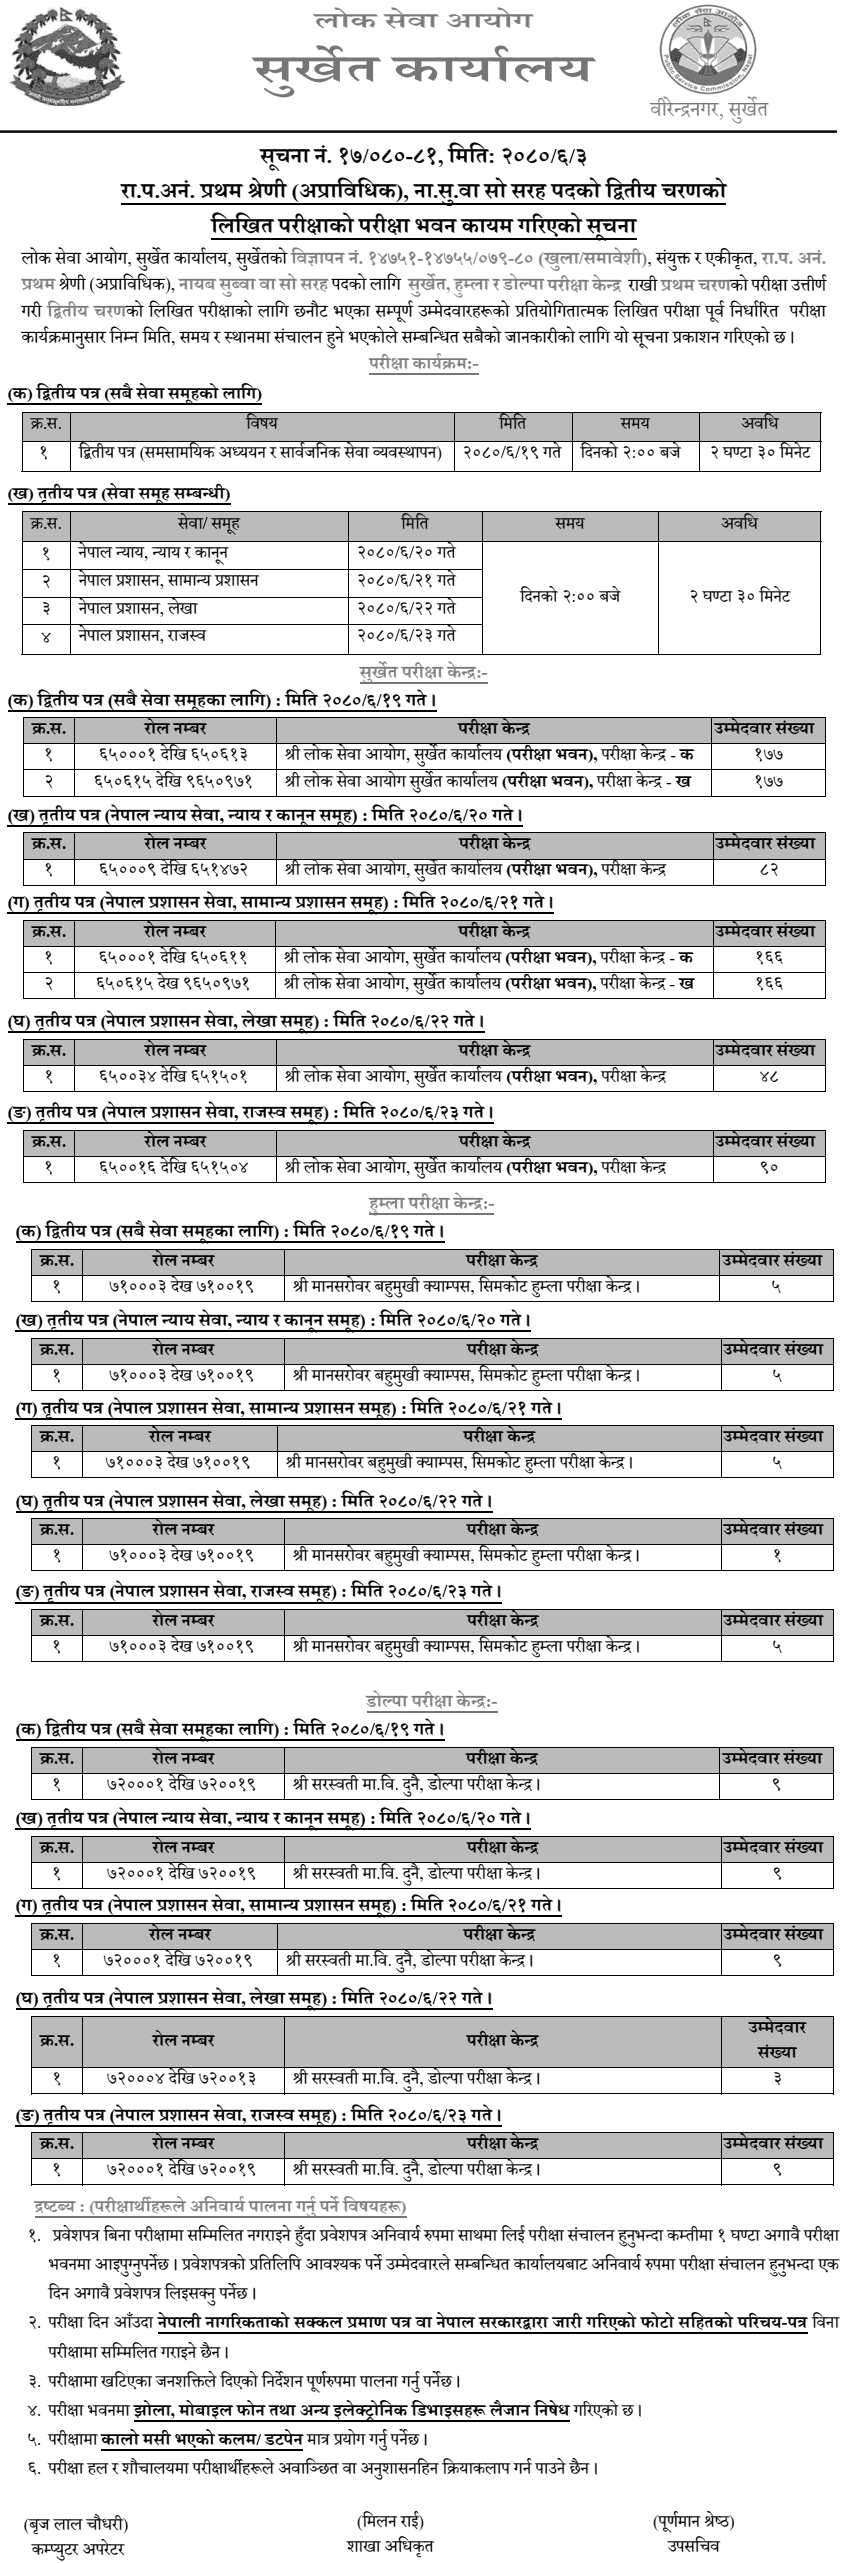 Lok Sewa Aayog Nayab Subba 2nd Phase Written Exam Center Surkhet, Humla, & Dolpa 2080